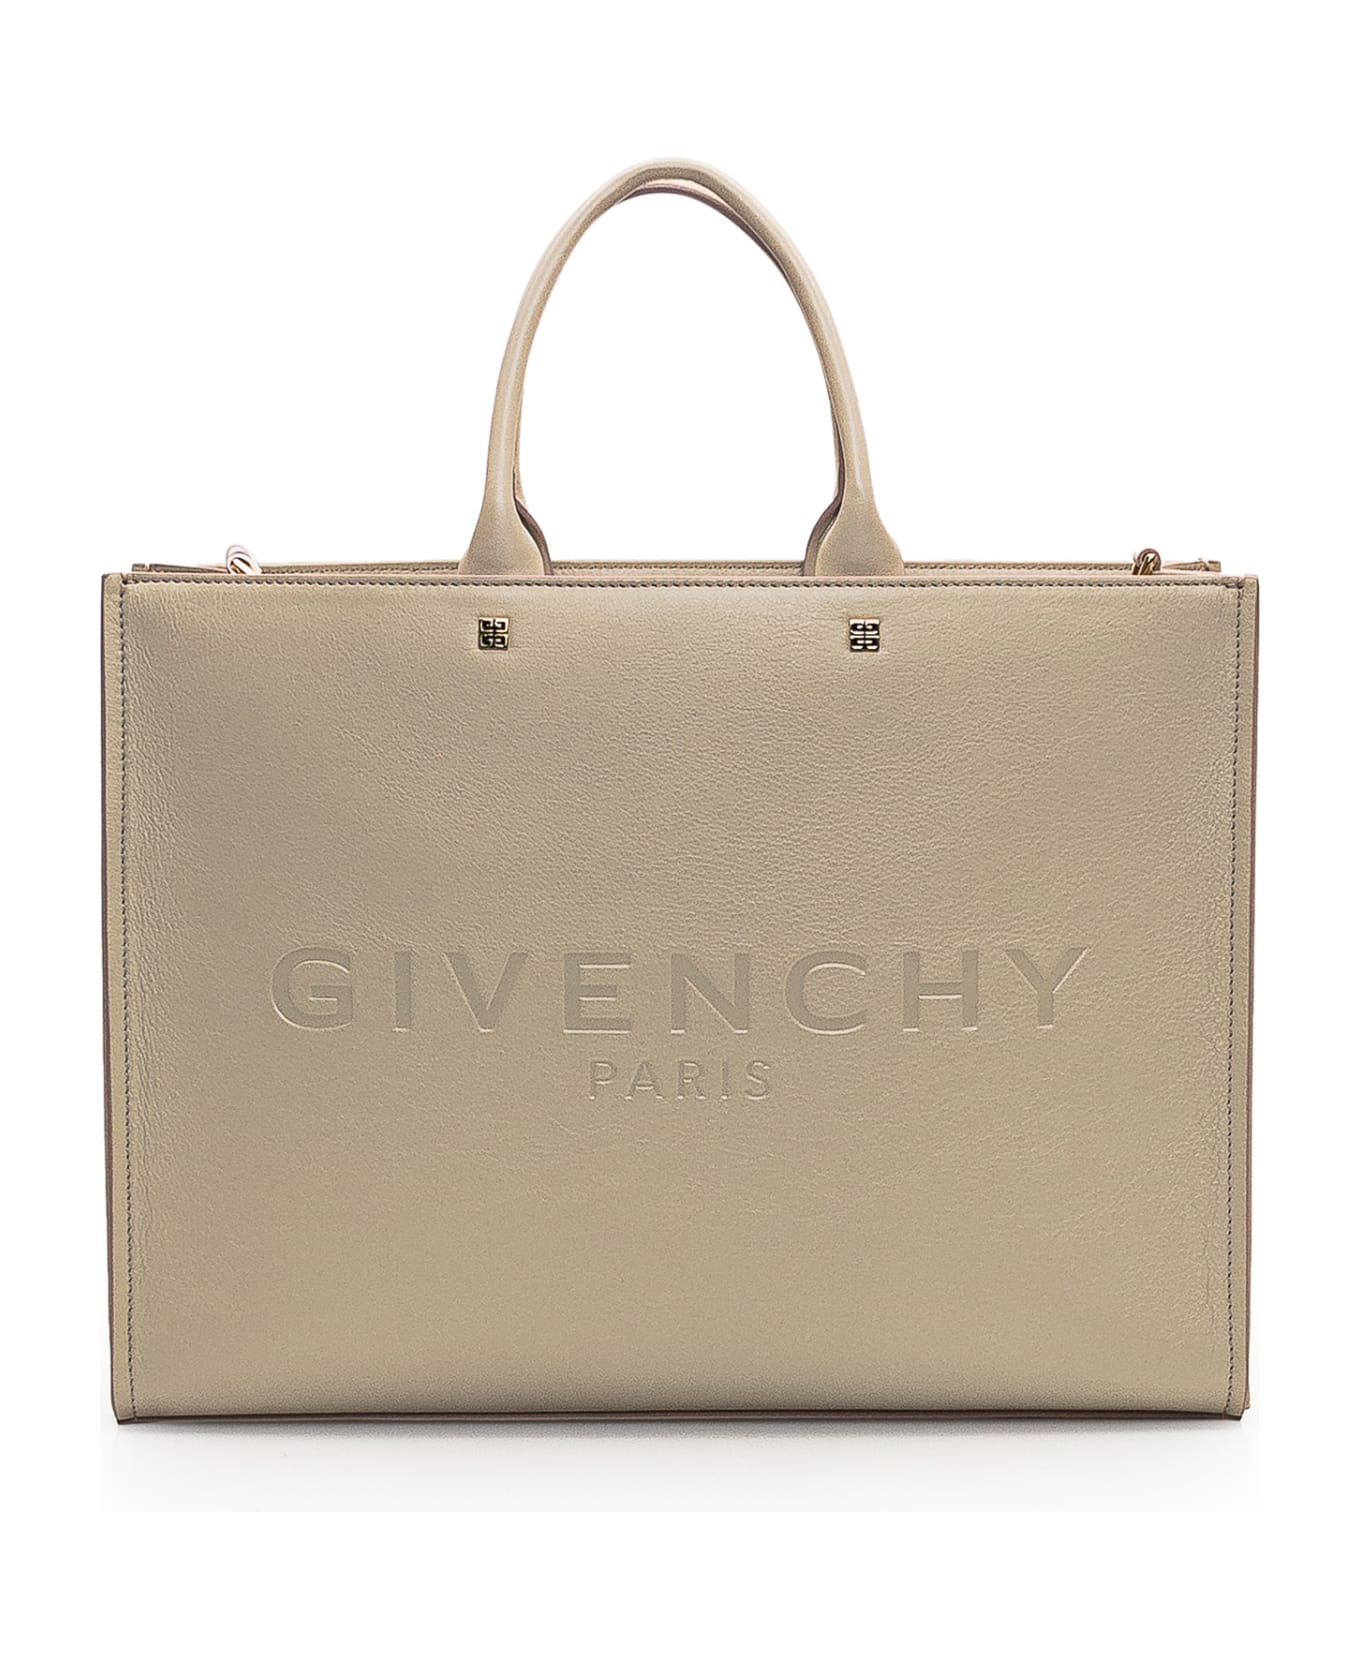 Givenchy G-tote Bag - NATURAL BEIGE トートバッグ